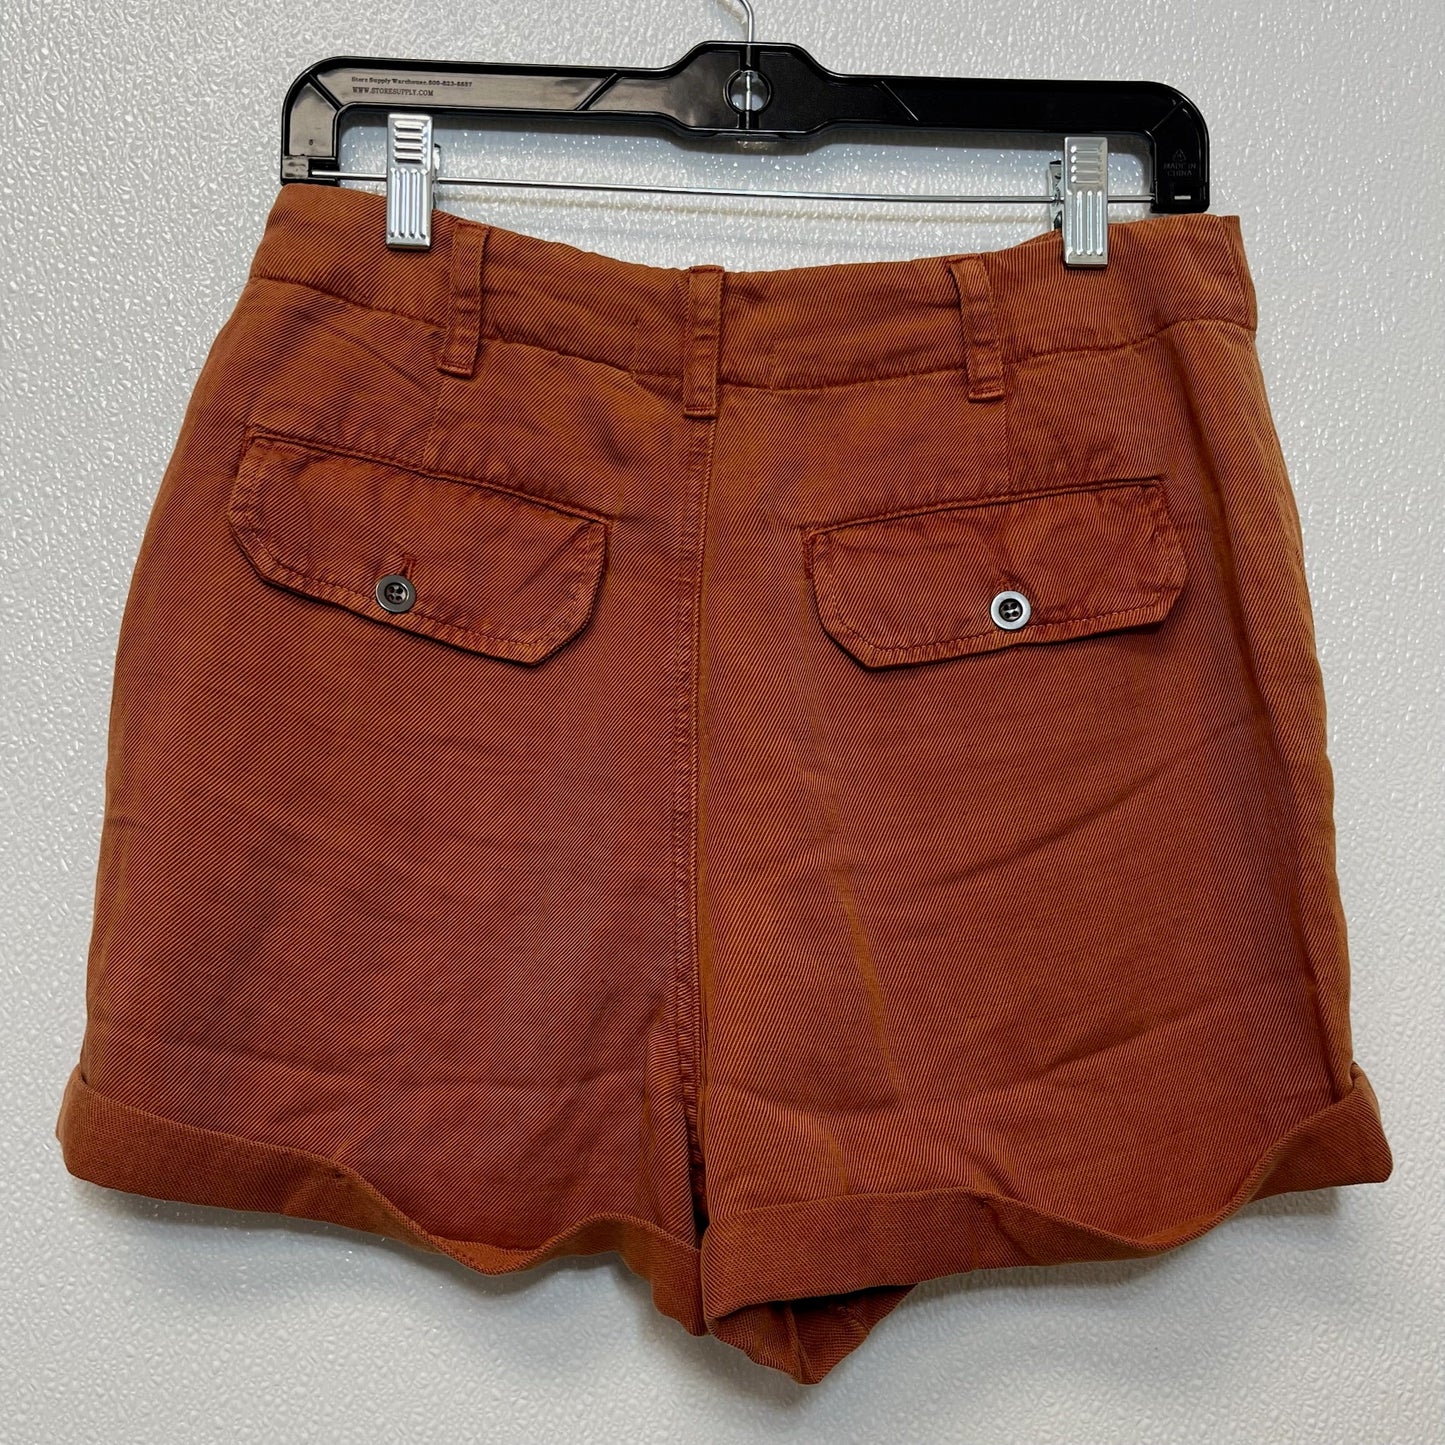 Rust Shorts Bella Dahl, Size 6